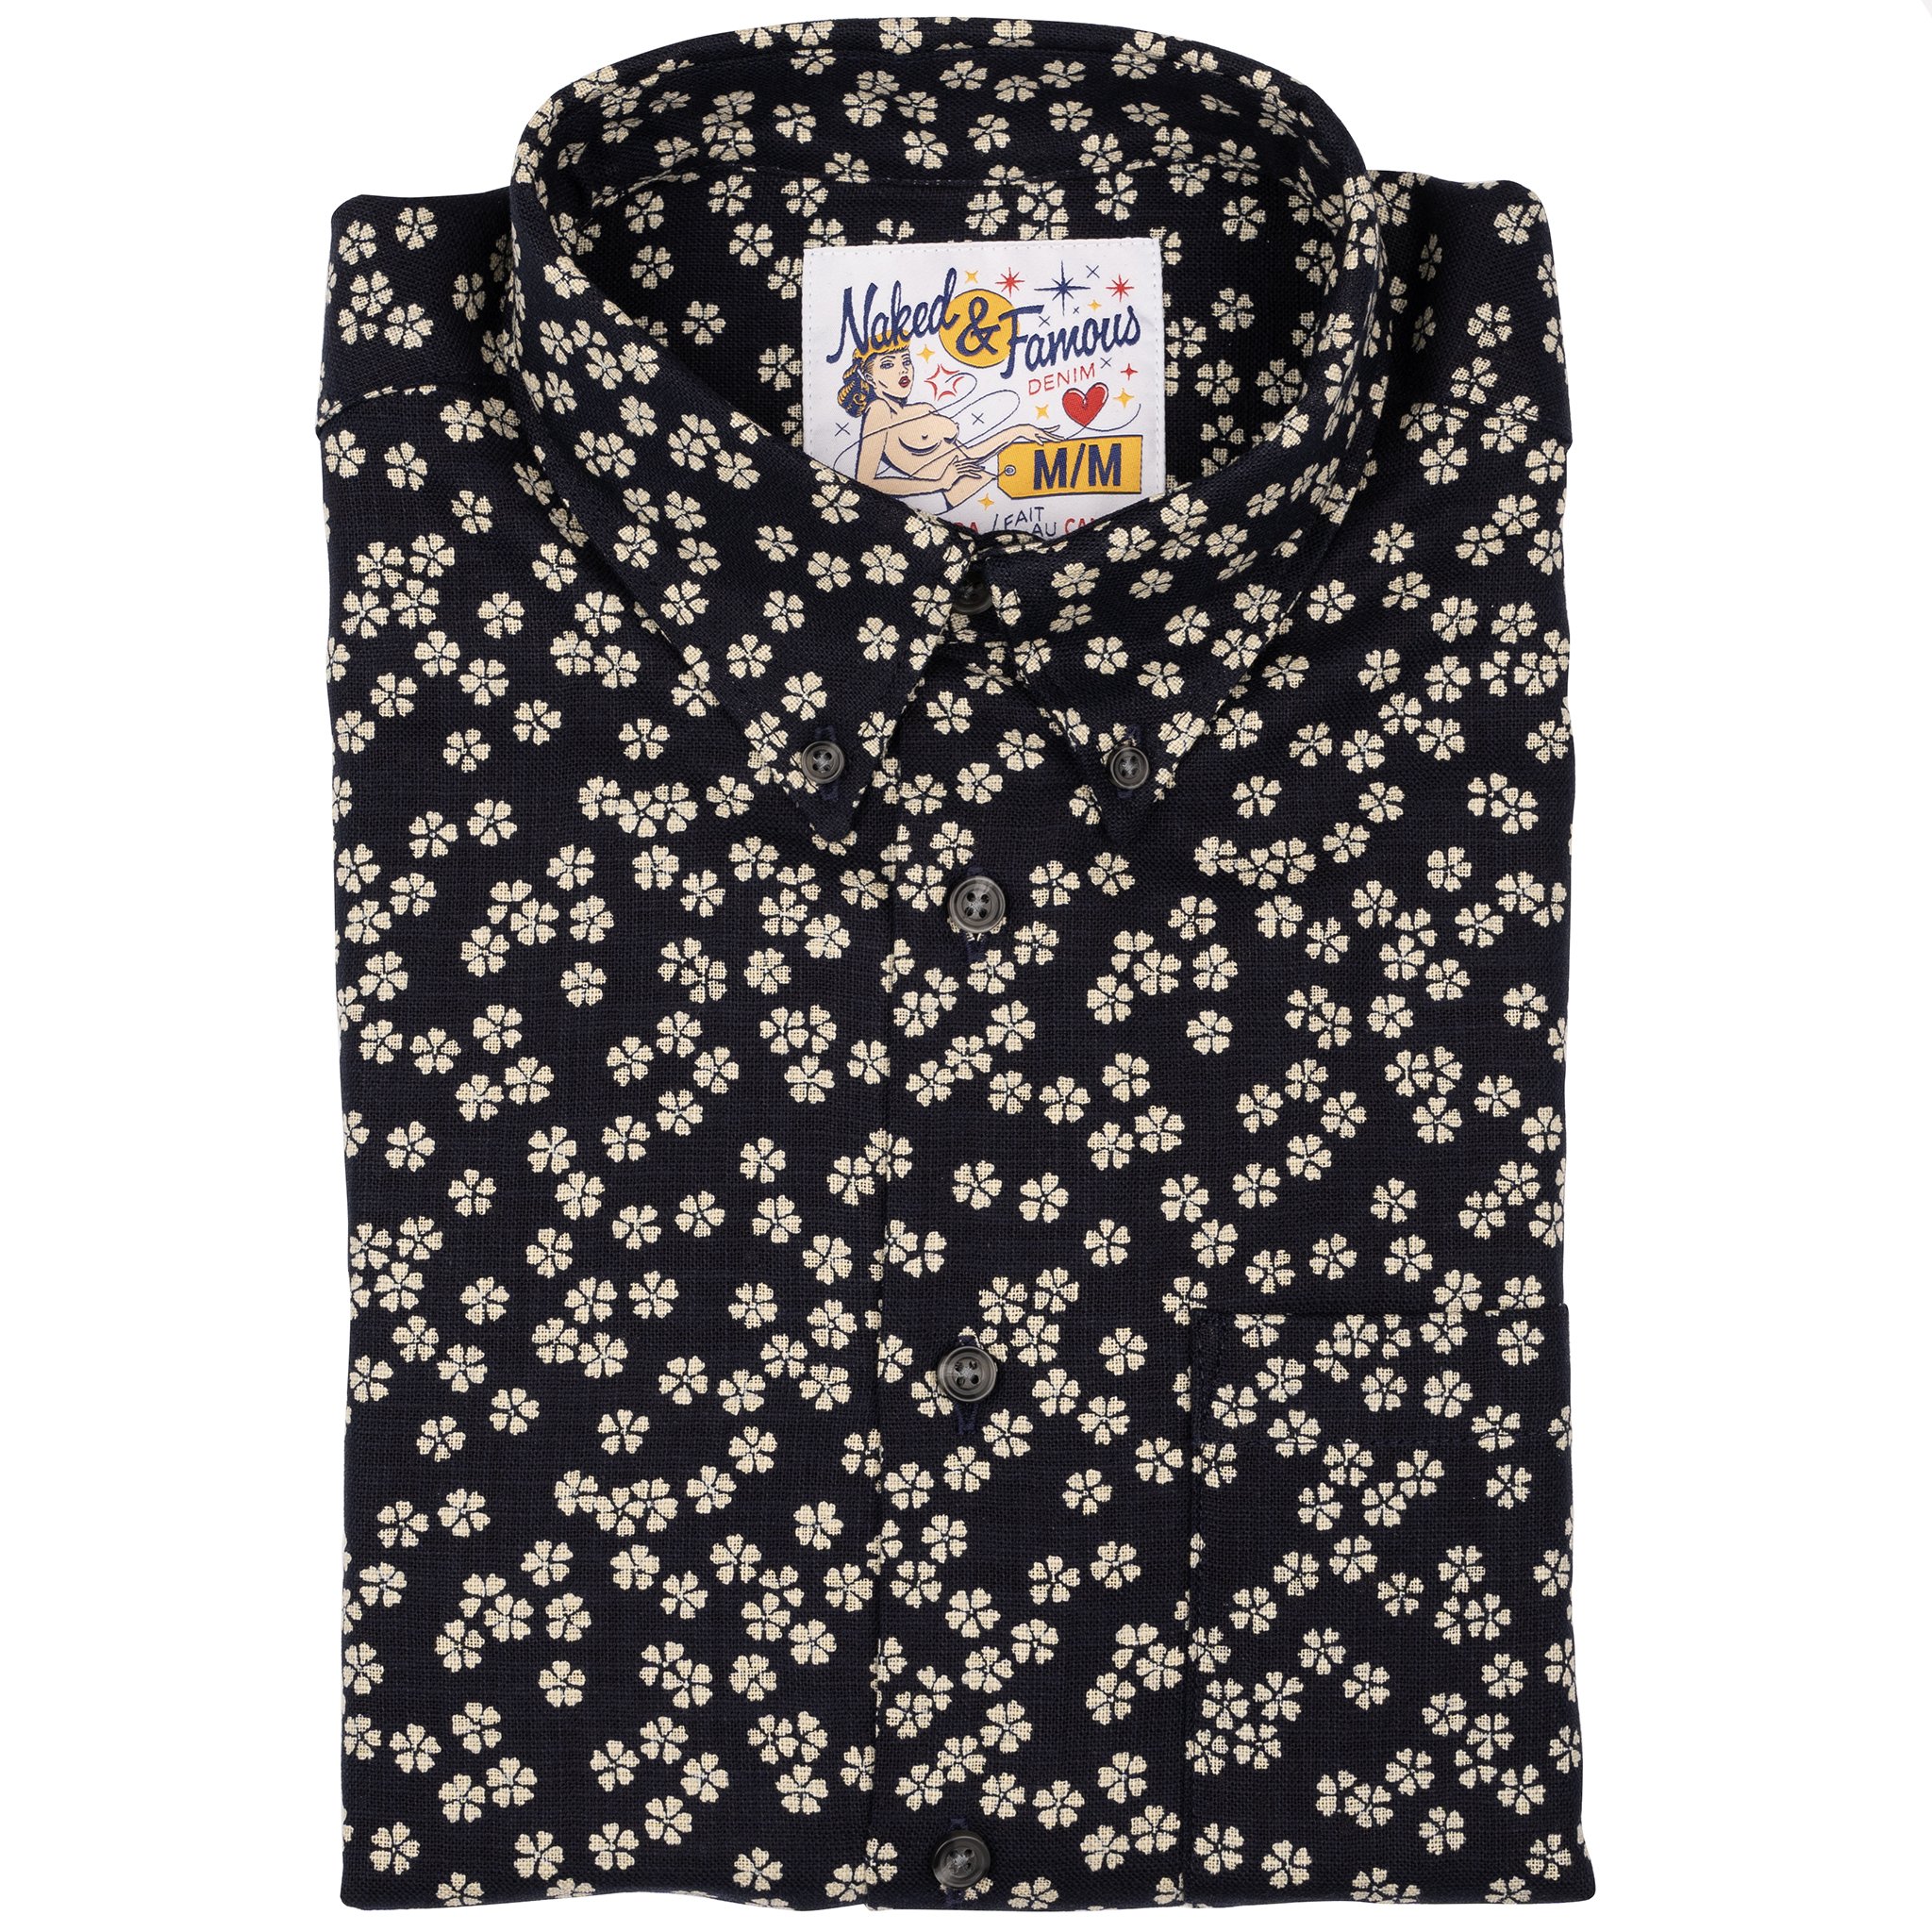  Easy Shirt - Kimono Flowers - folded 